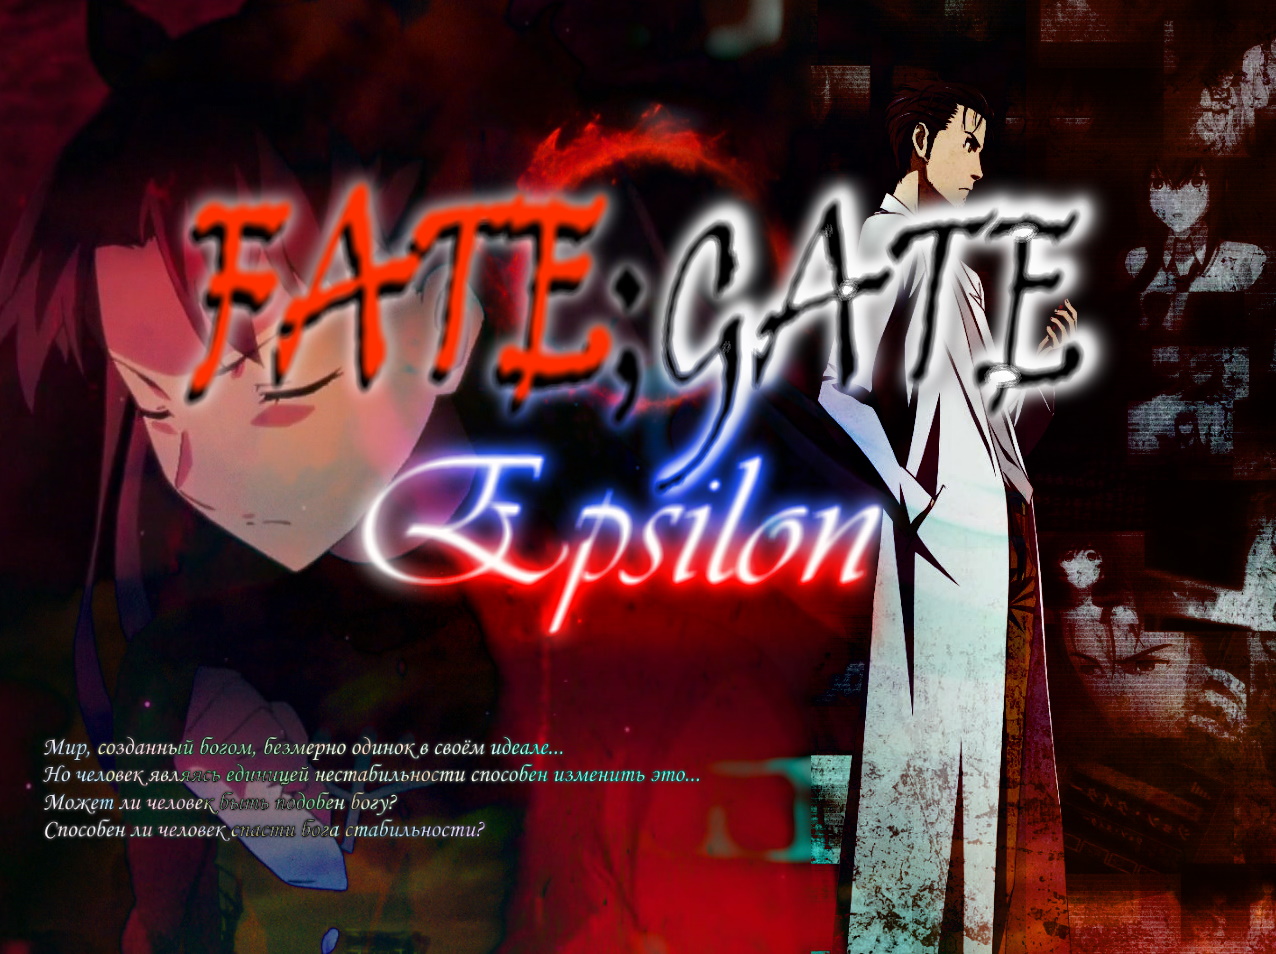 Fate;Gate Epsilon